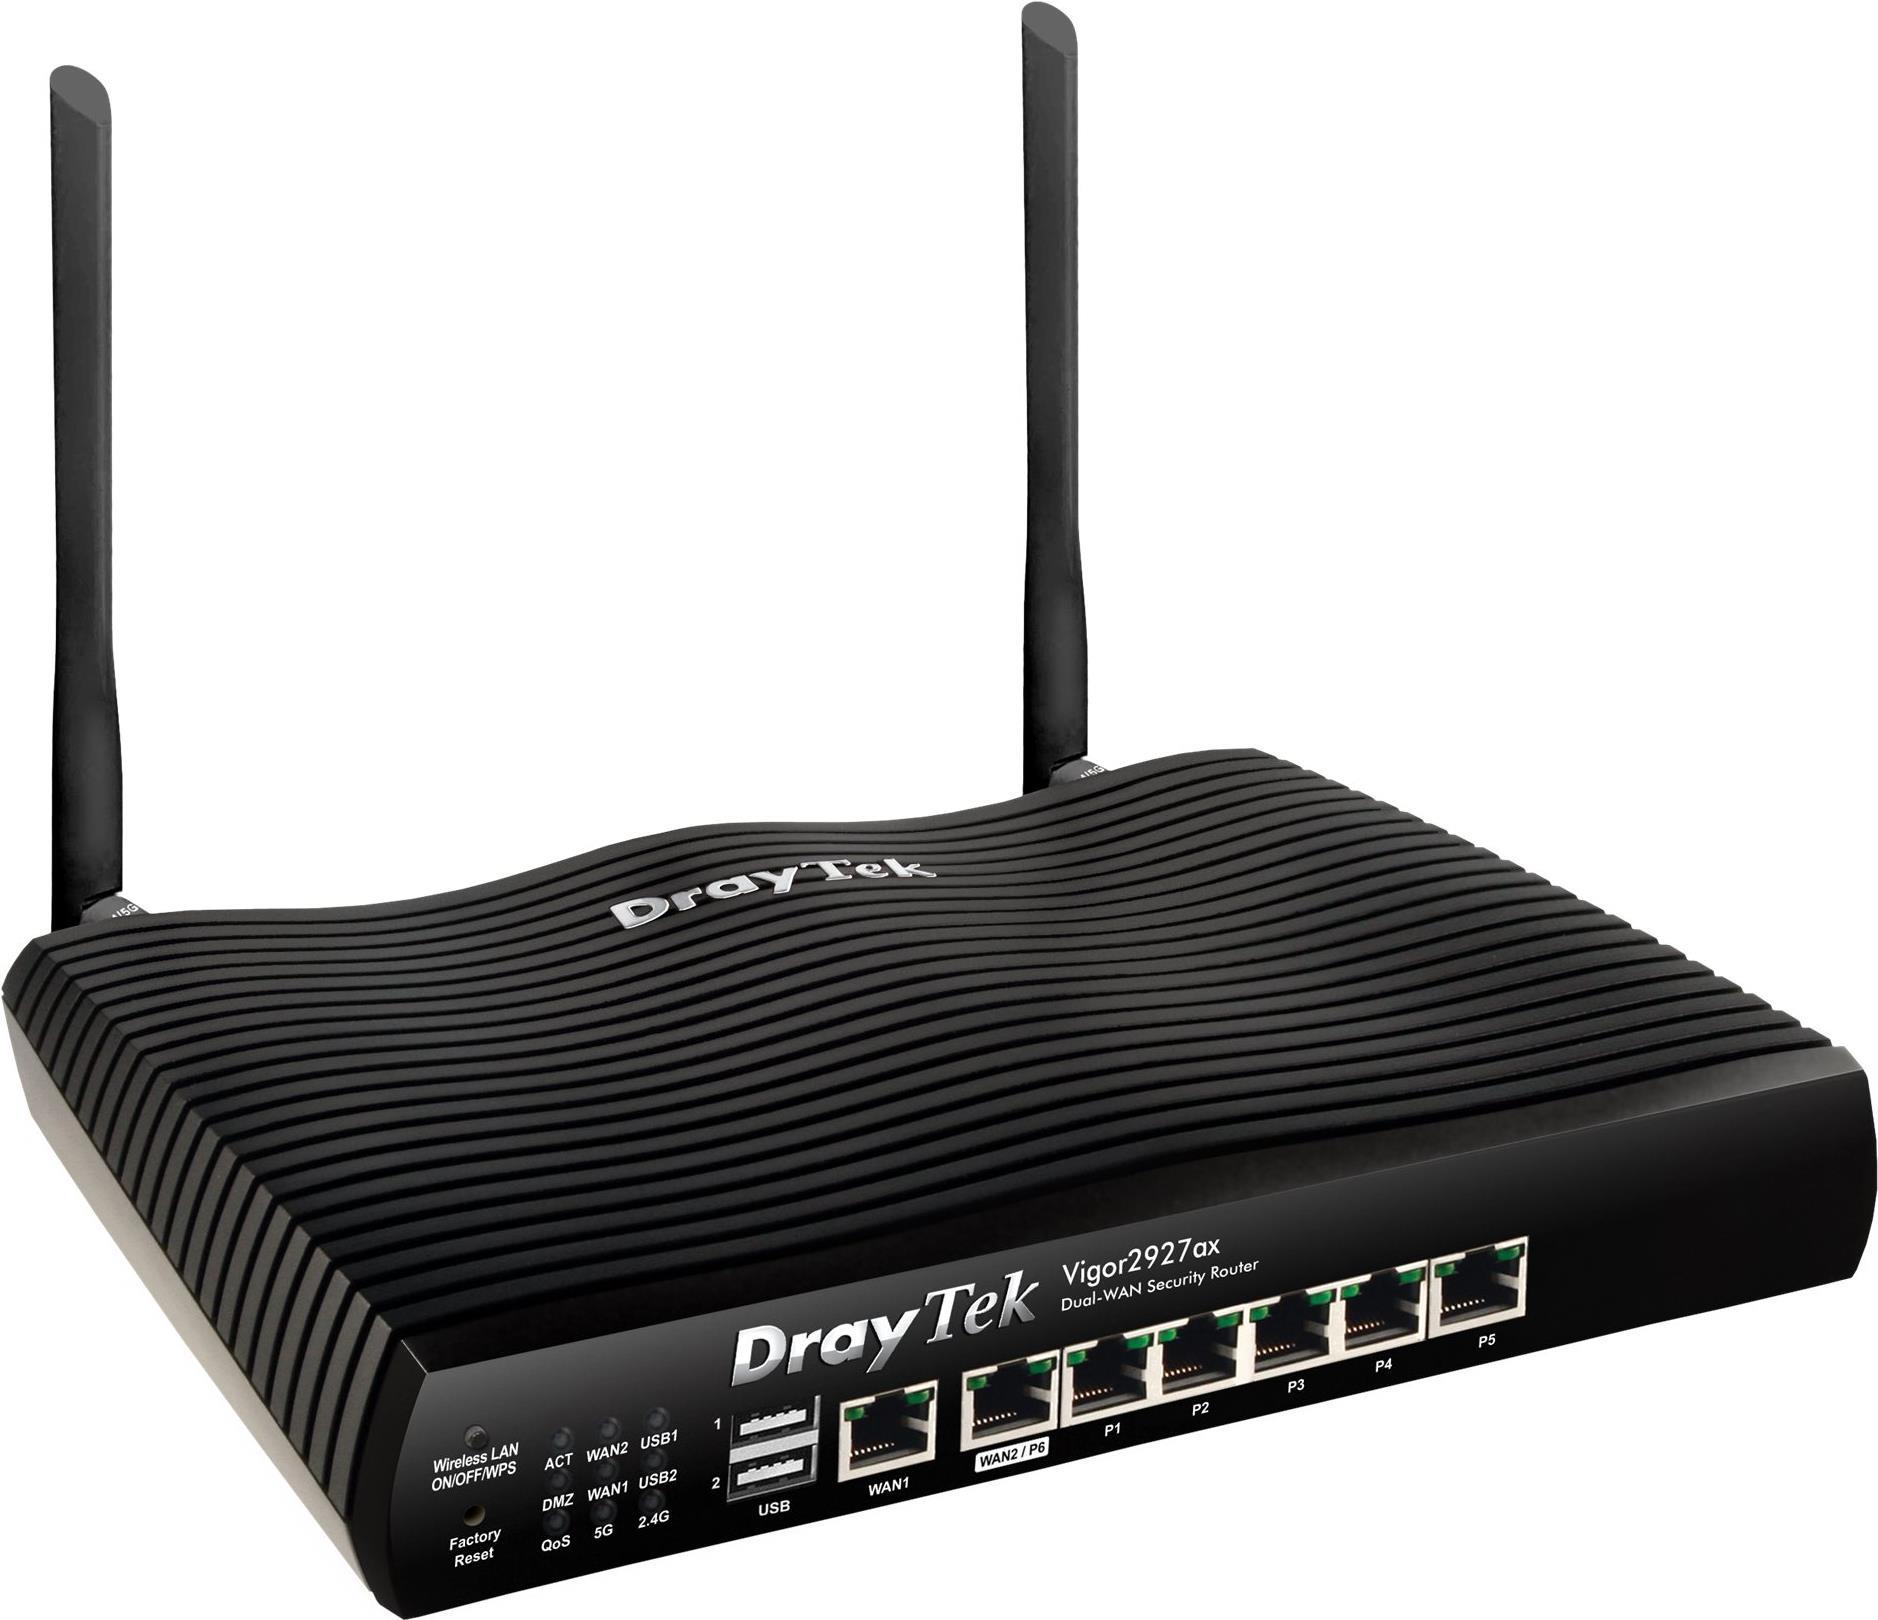 Draytek Vigor 2927ax - Wireless Router - Switch mit 6 Ports - GigE - WAN-Ports: 2 - 802,11a/b/g/n/ac/ax - Dual-Band (V2927AX-DE-AT-CH)